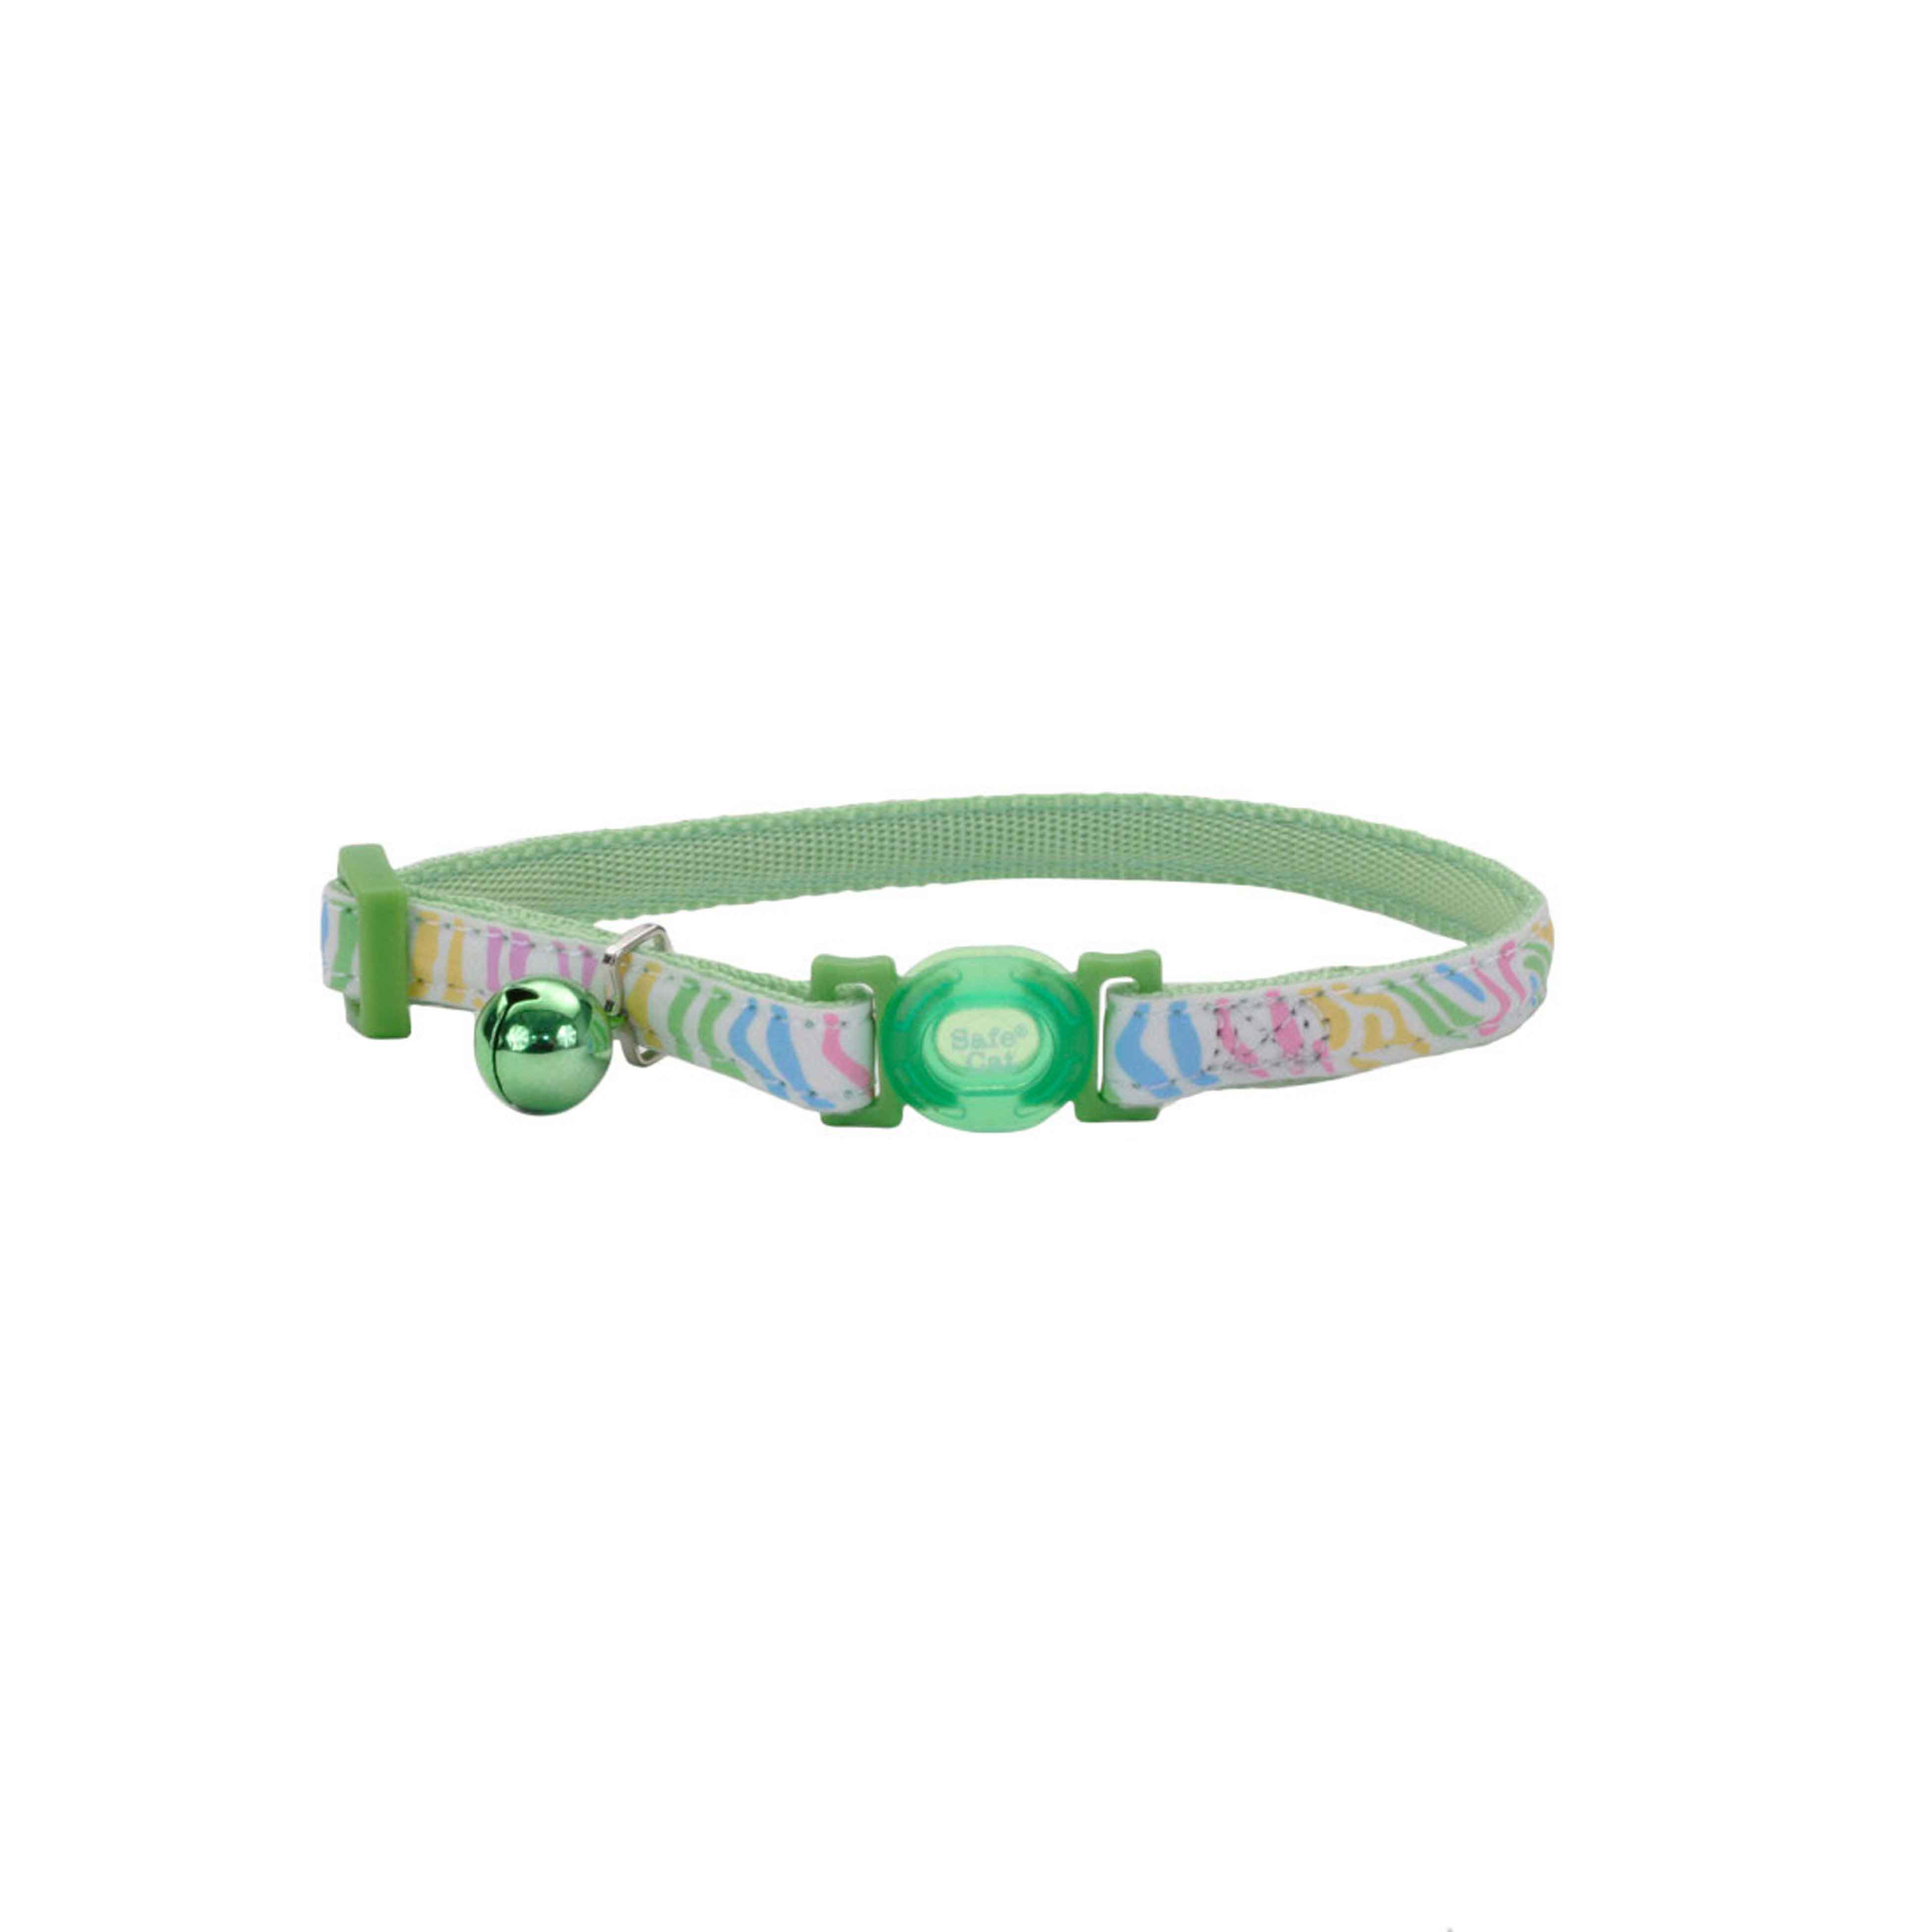 Safe CatÂ® Glow in the Dark Adjustable Breakaway Collar, Glowing Green Stripes, 3/8